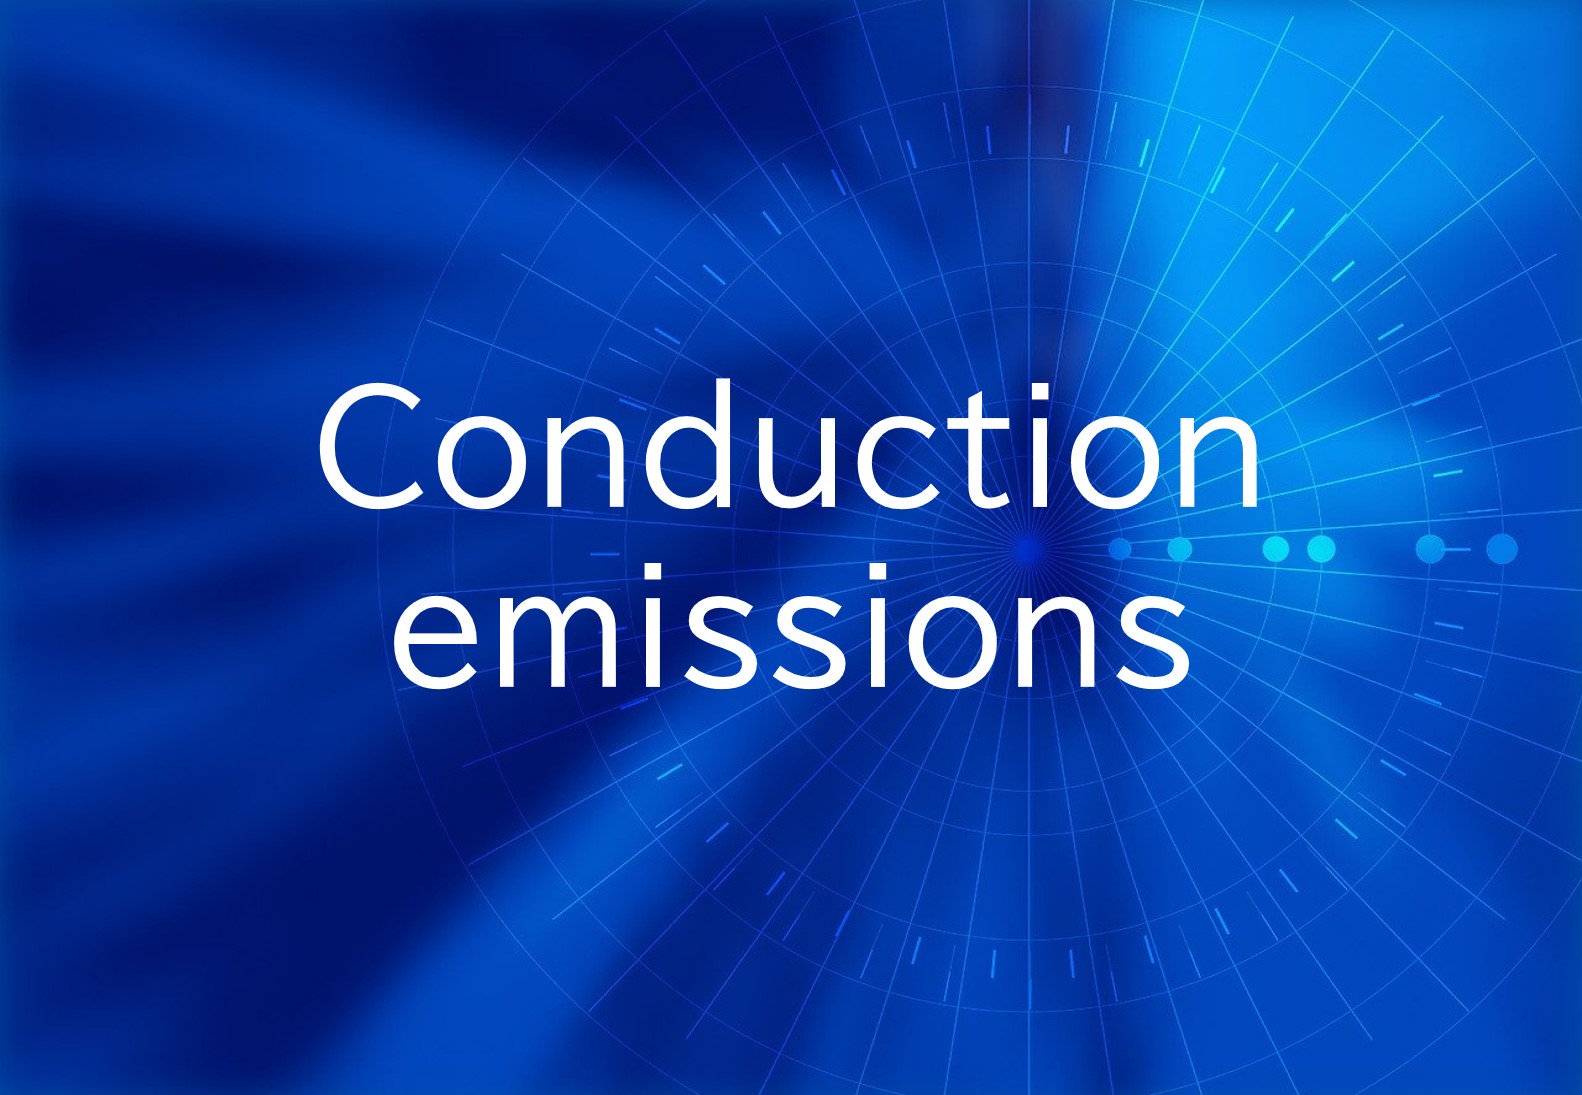 Conduction emissions